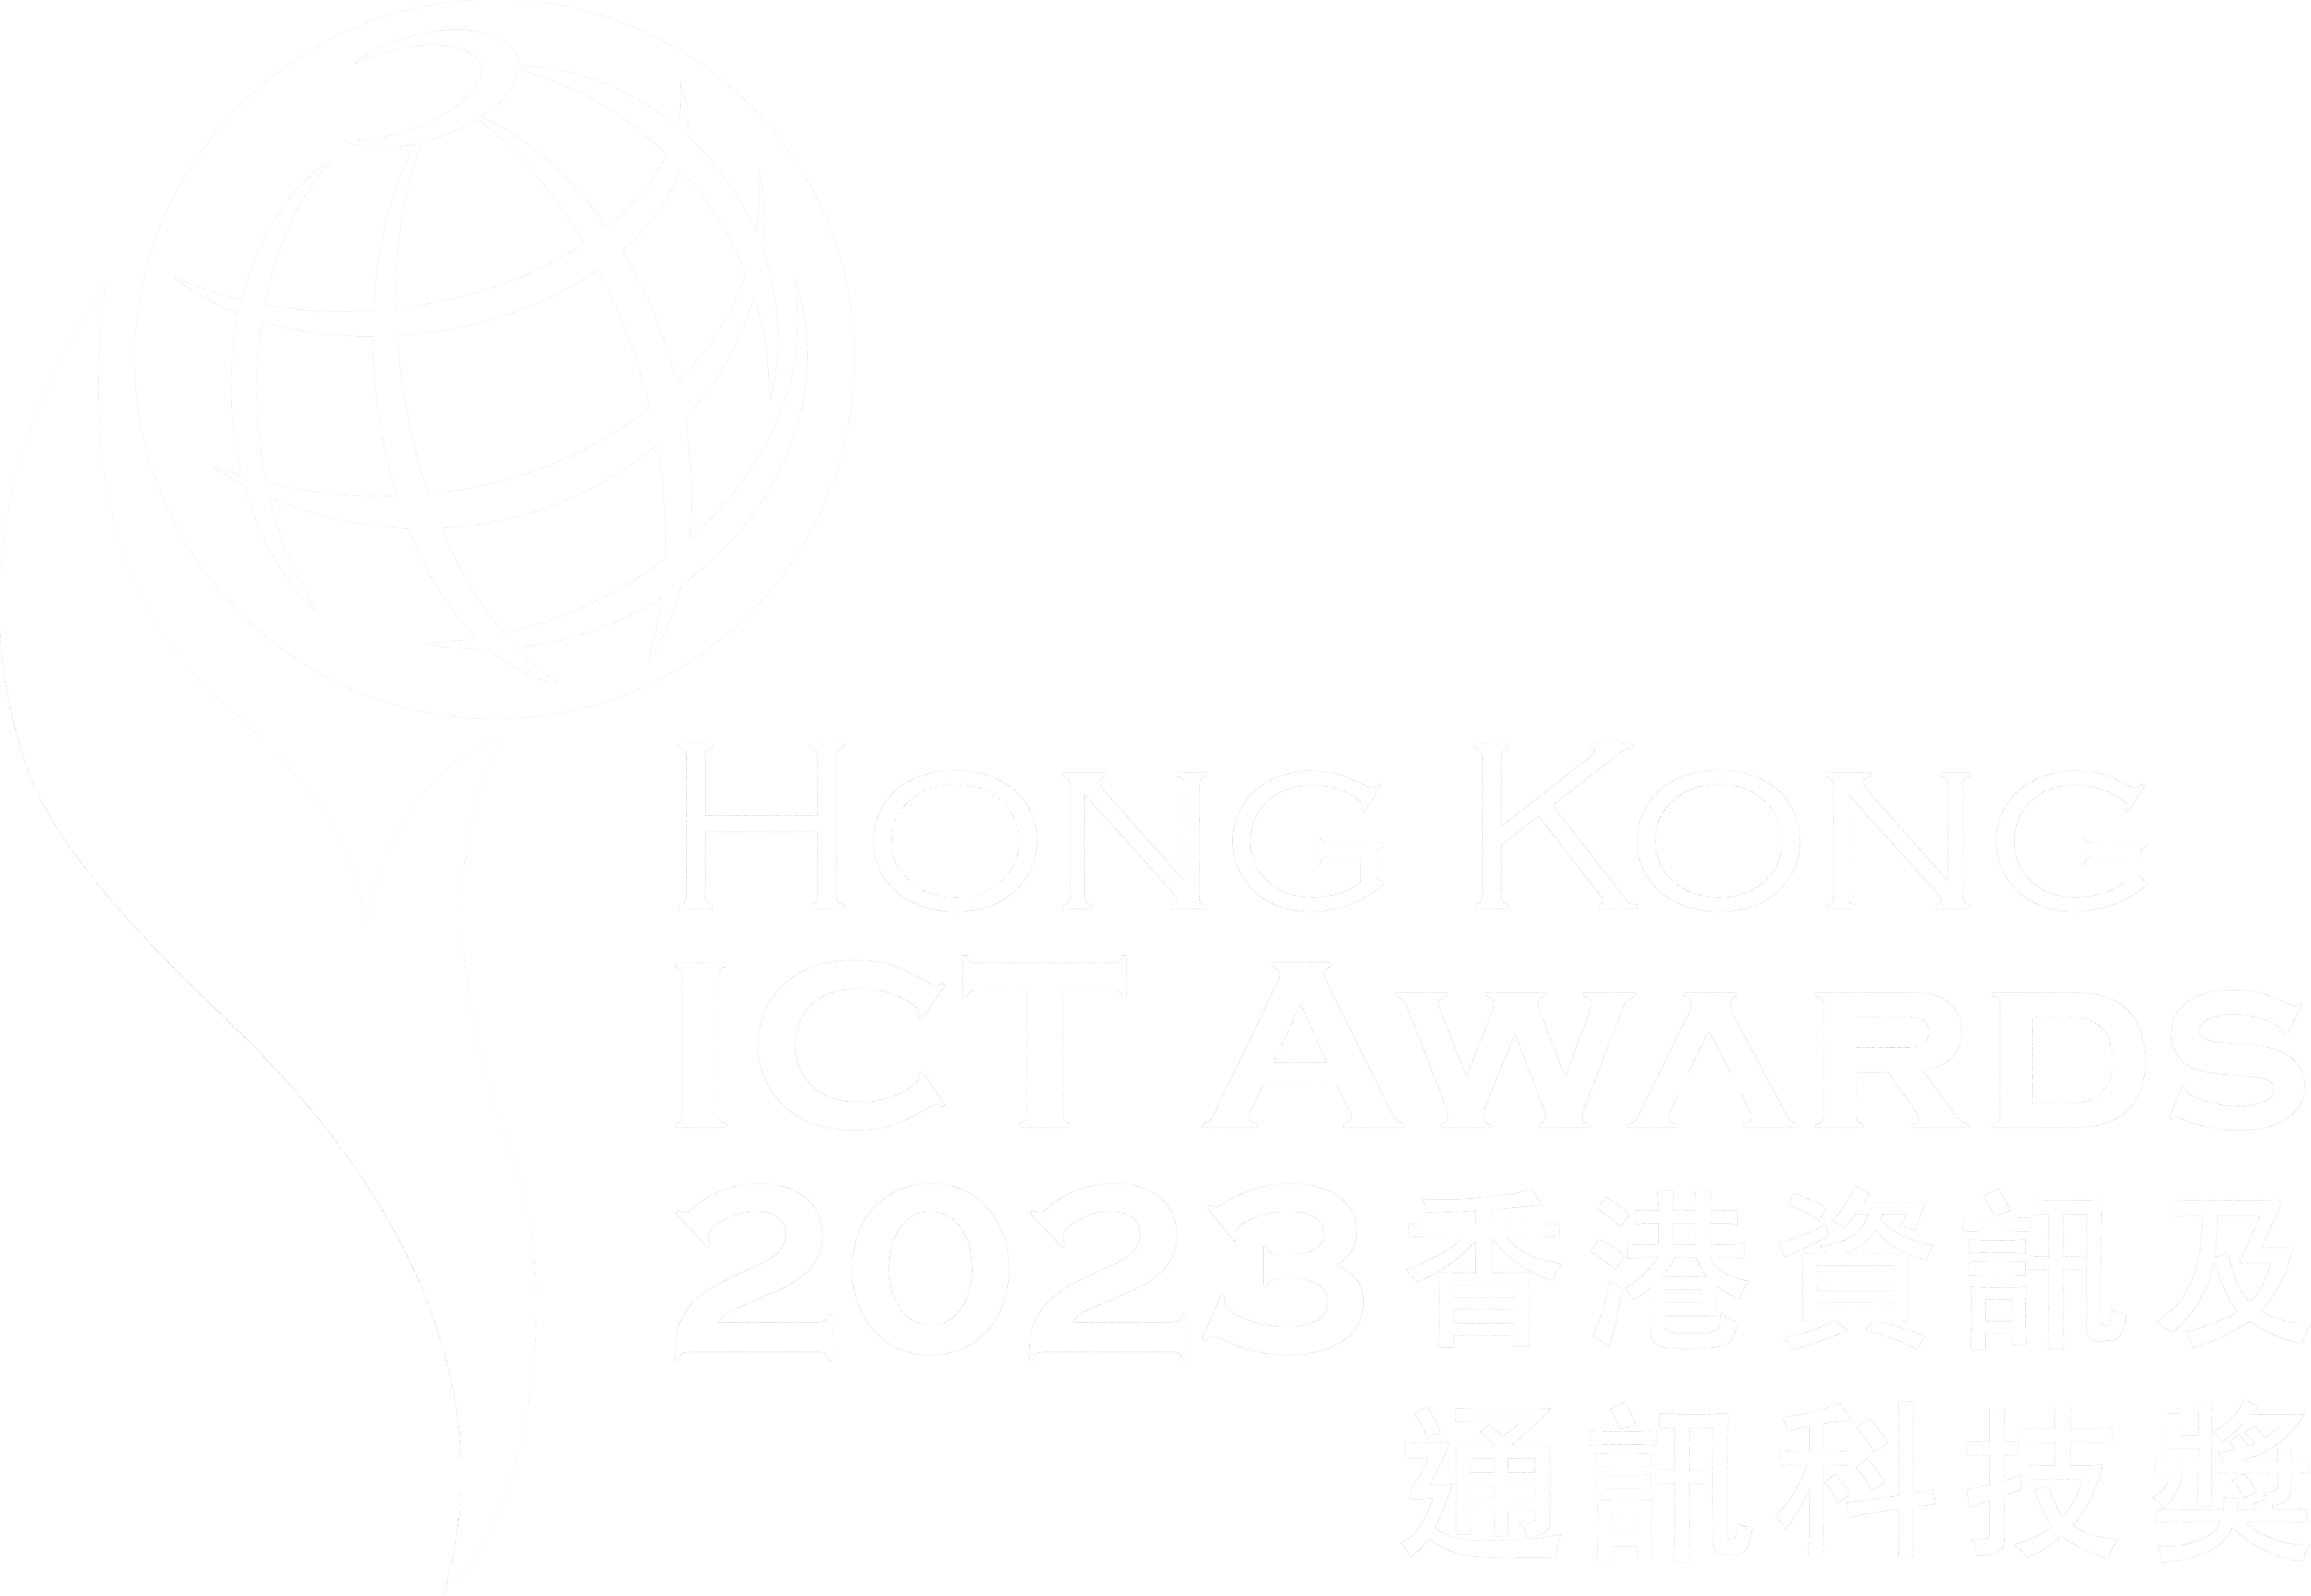 Hong Kong ICT Award 2023 Gold Award (TalentLabs / TechJobAsia)